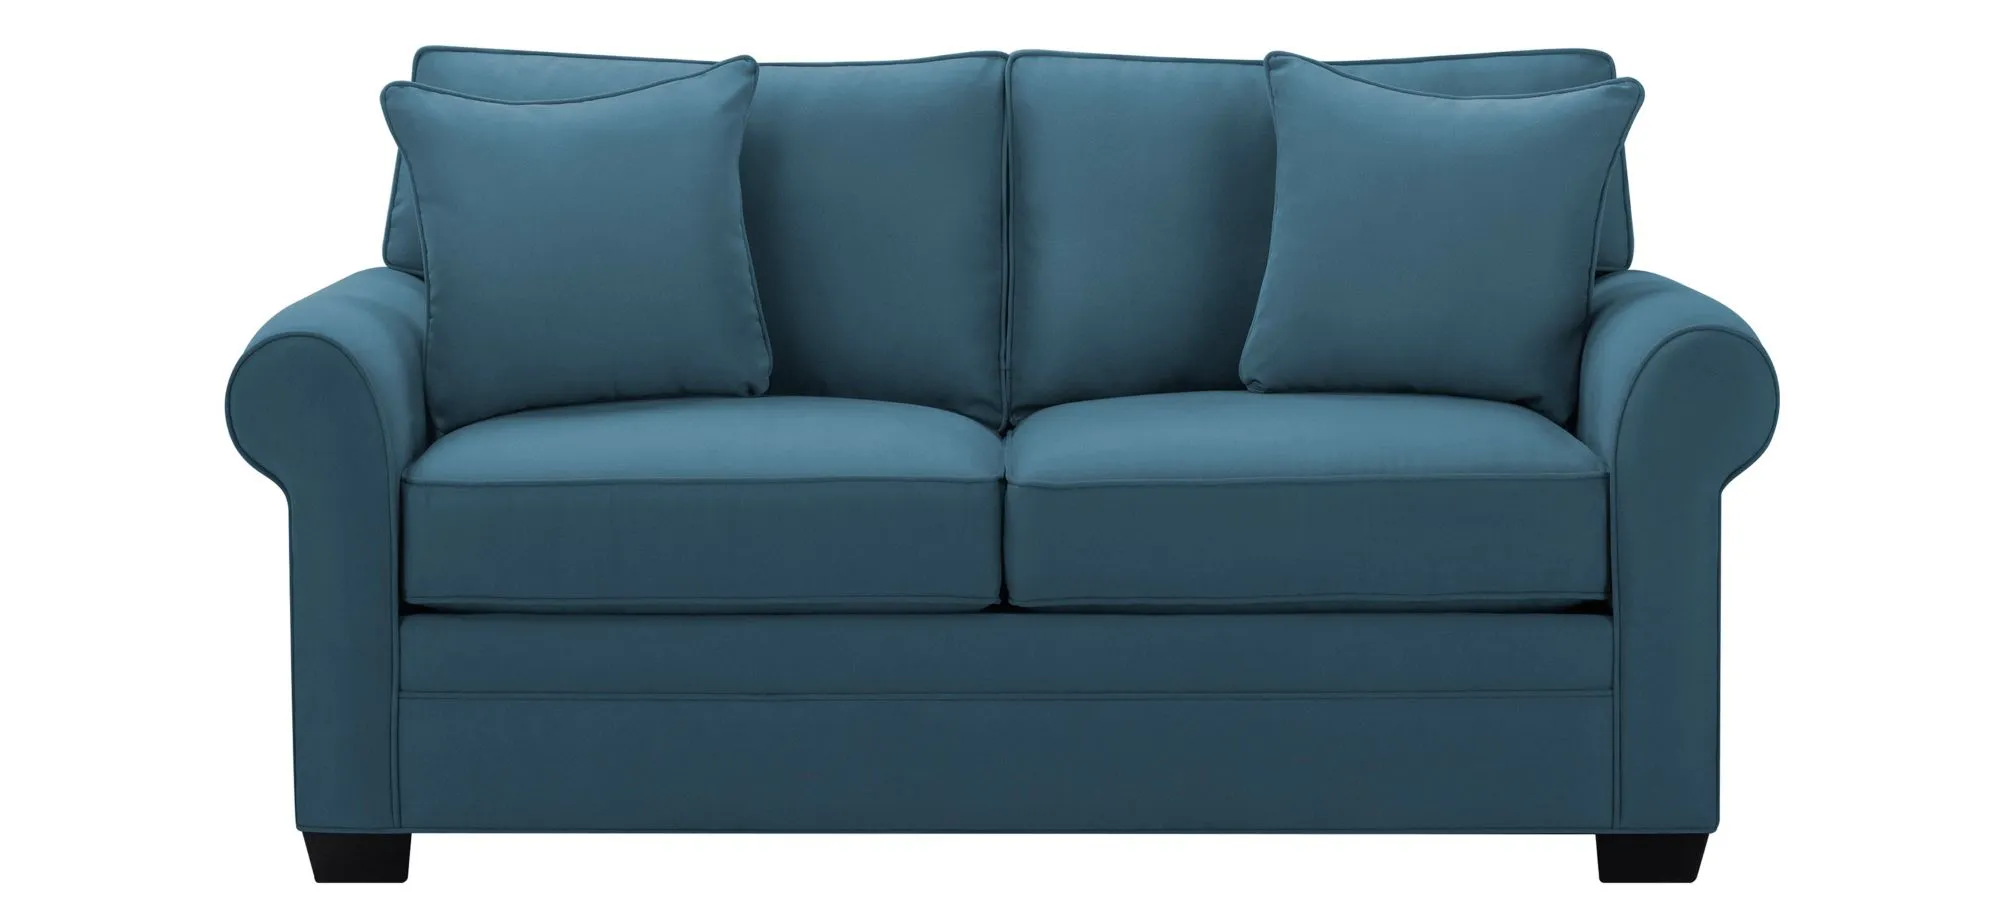 Glendora Full Sleeper Sofa in Suede So Soft Indigo by H.M. Richards